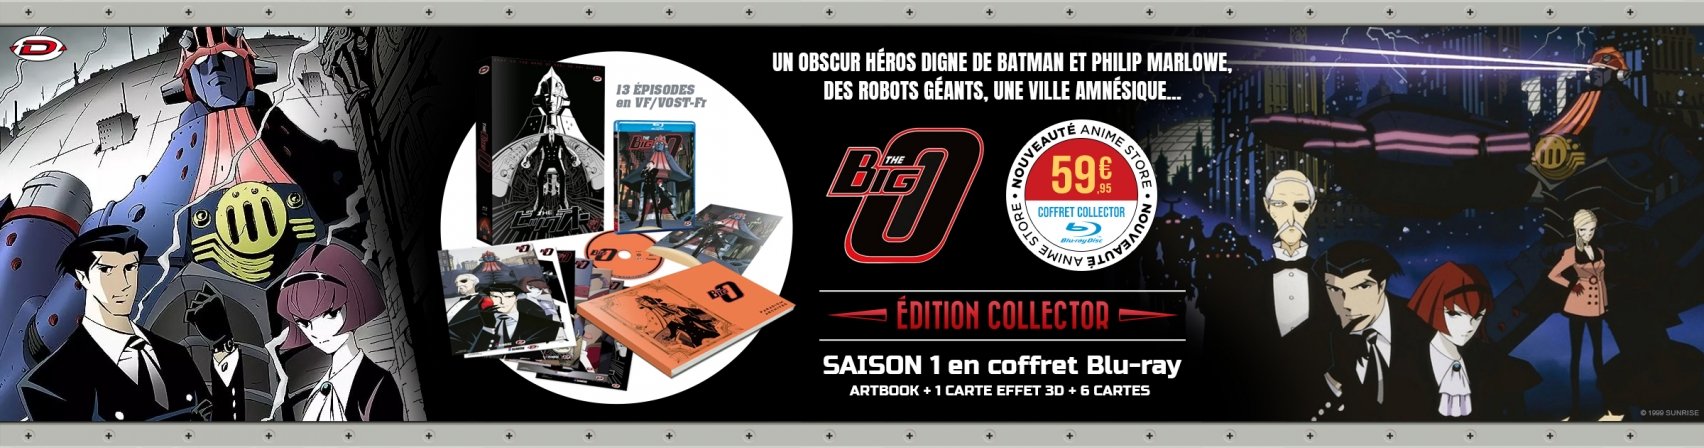 Nouveaut : The Big O saison 1 coffret Blu-ray collector